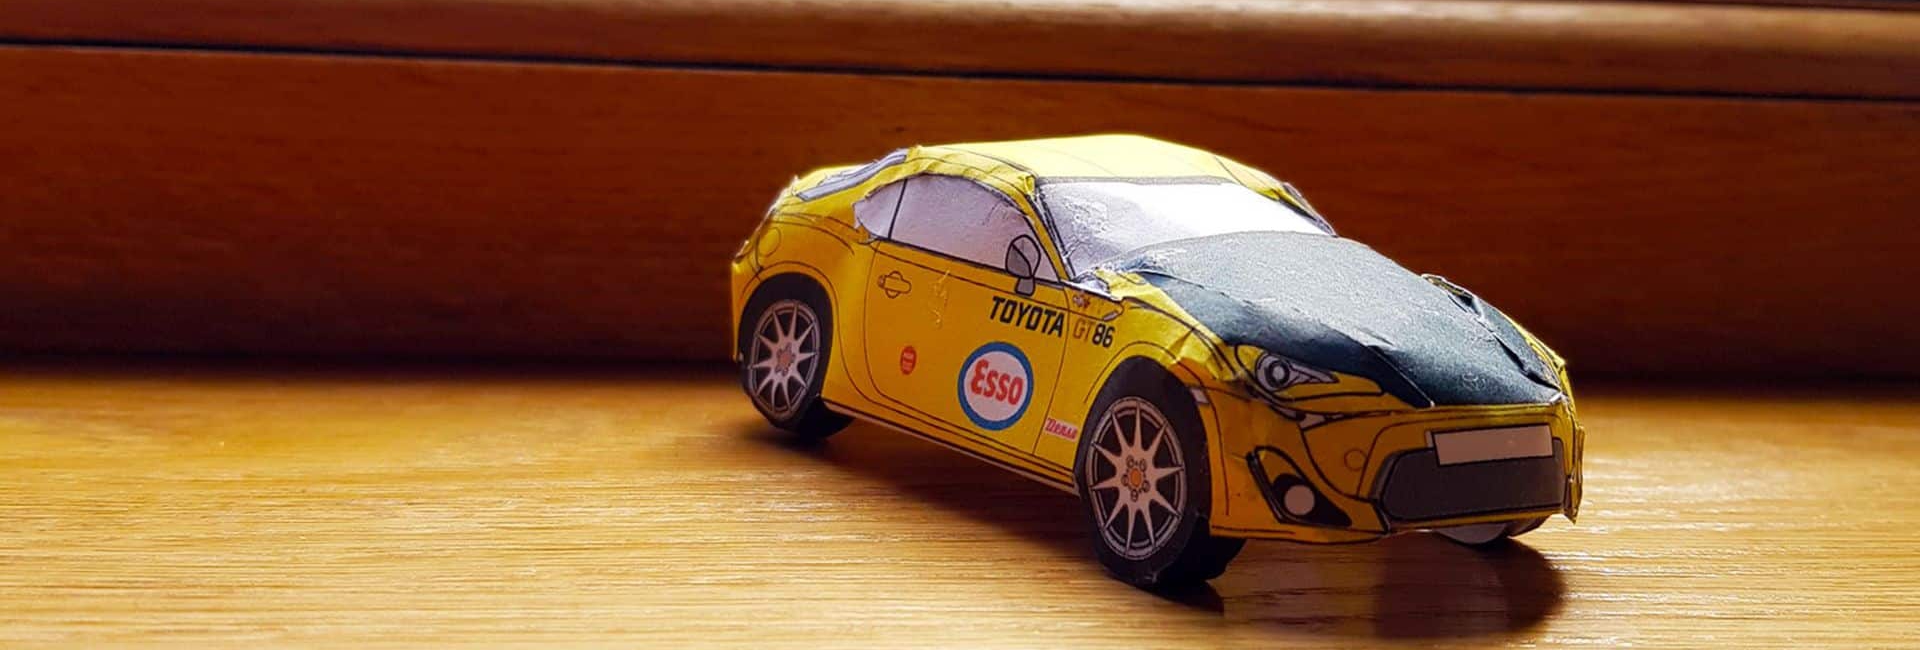 Hajtogass Toyota sportkupét